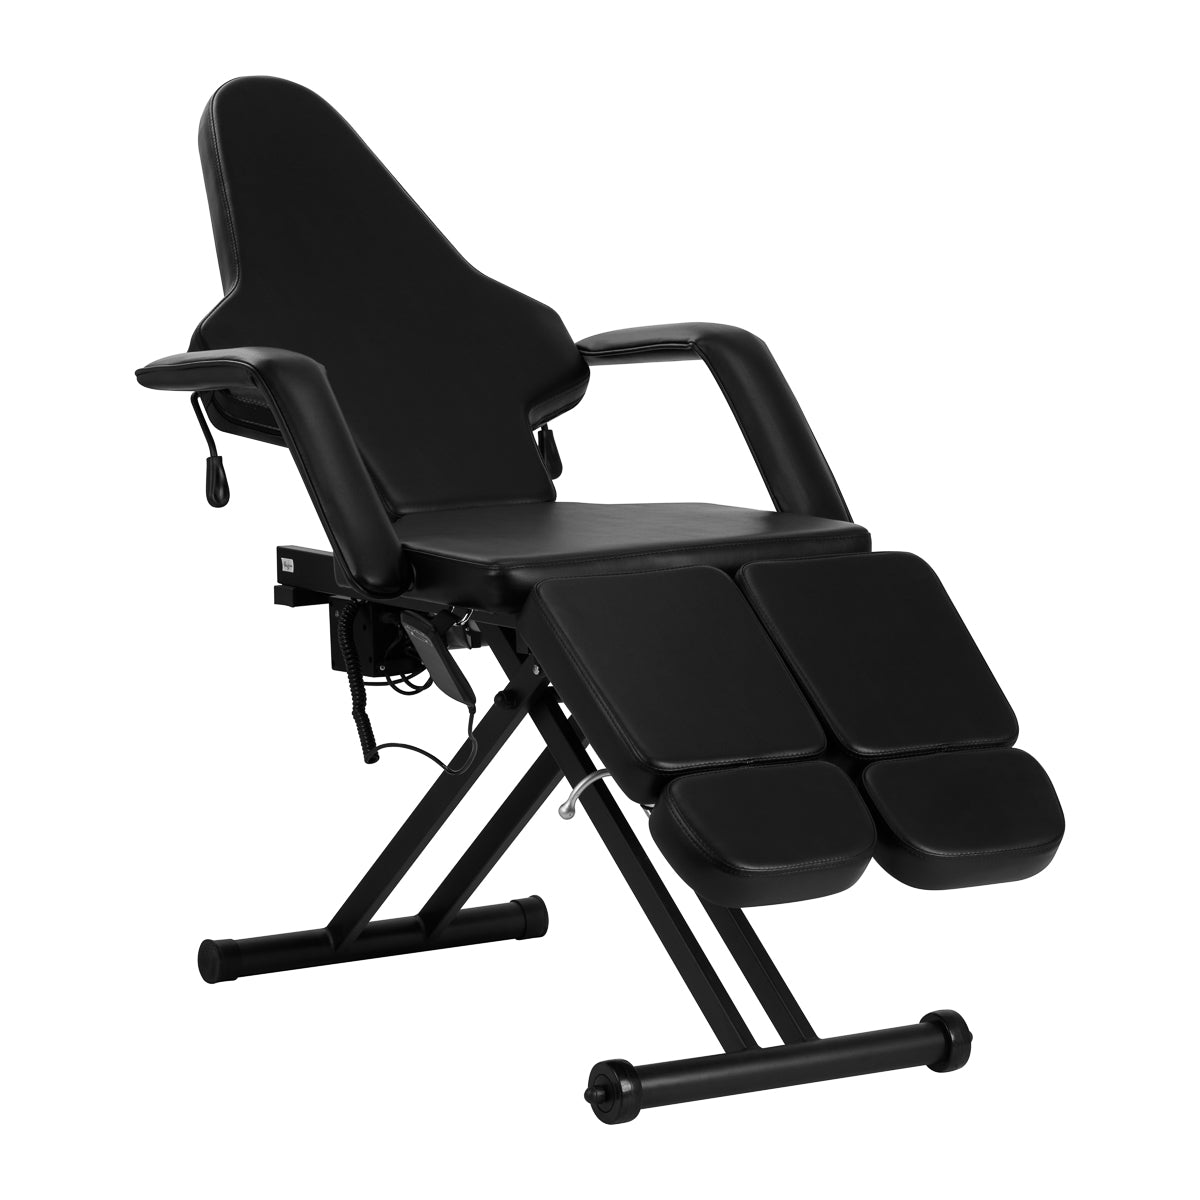 TATSoul - 680 Oros Client Chair - Ox Blood - Client Chairs - TATSoul -  Arredamento | Tattooland